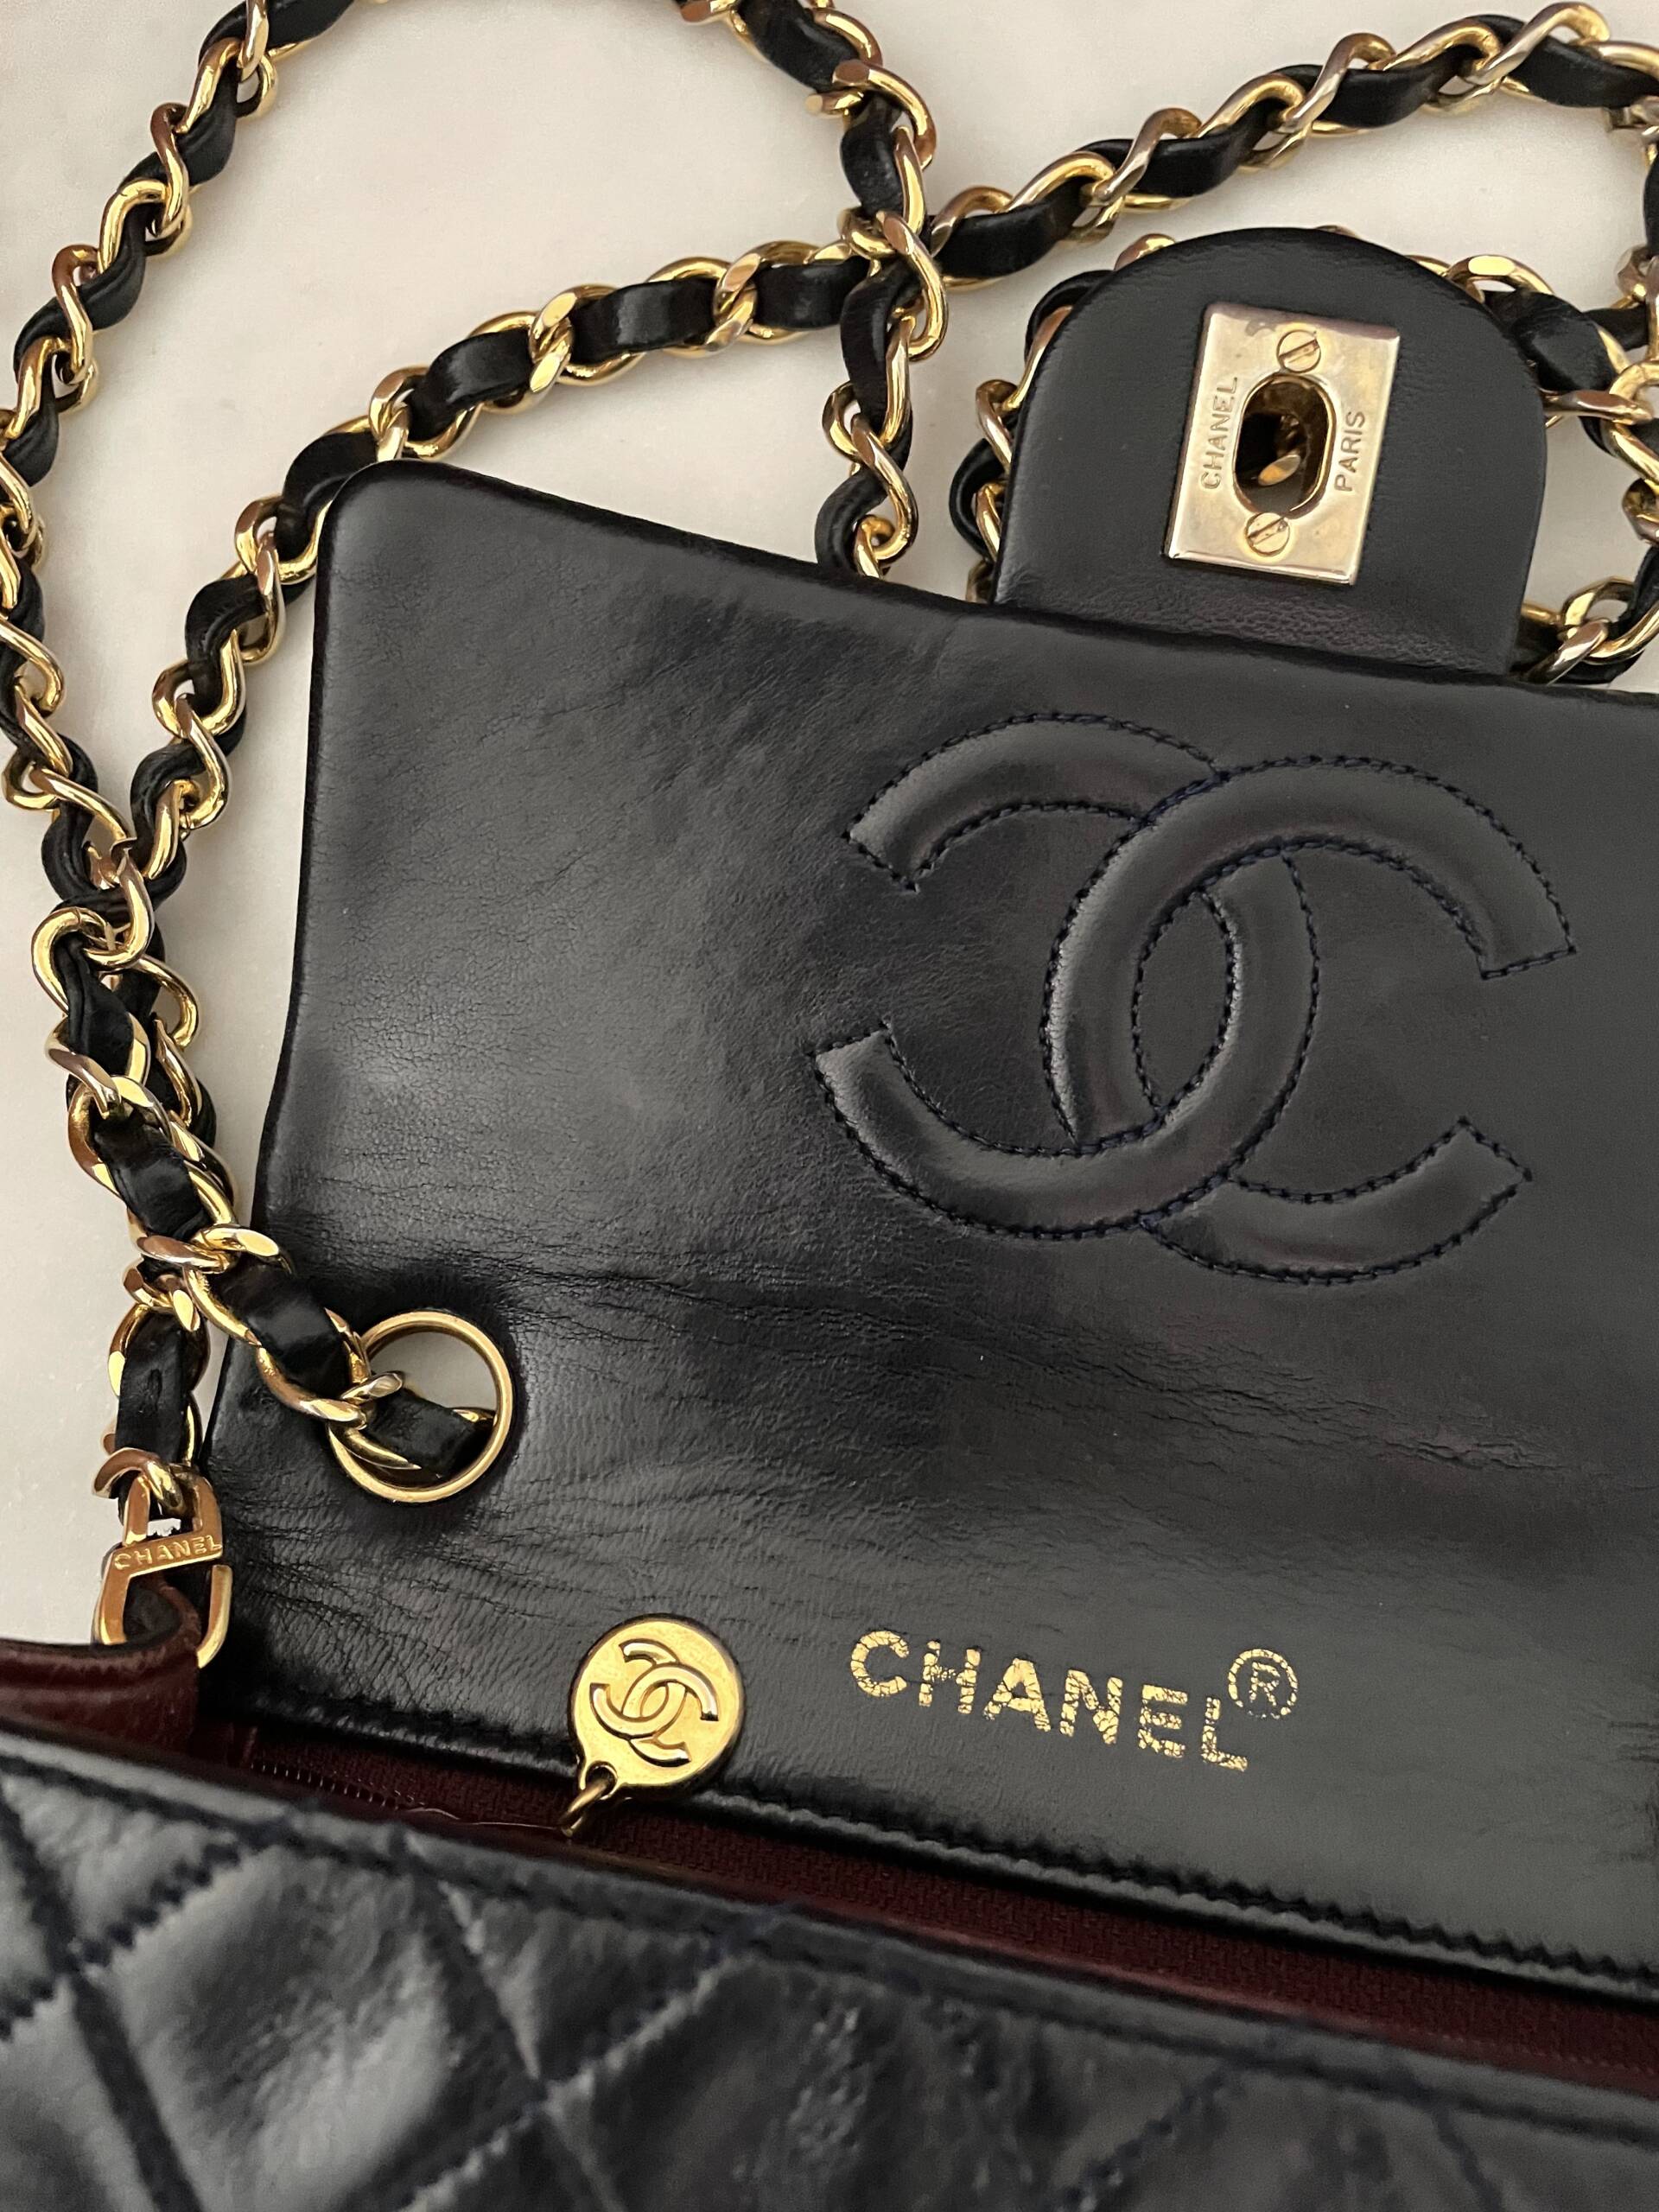 Buy Vintage Chanel Vault Online